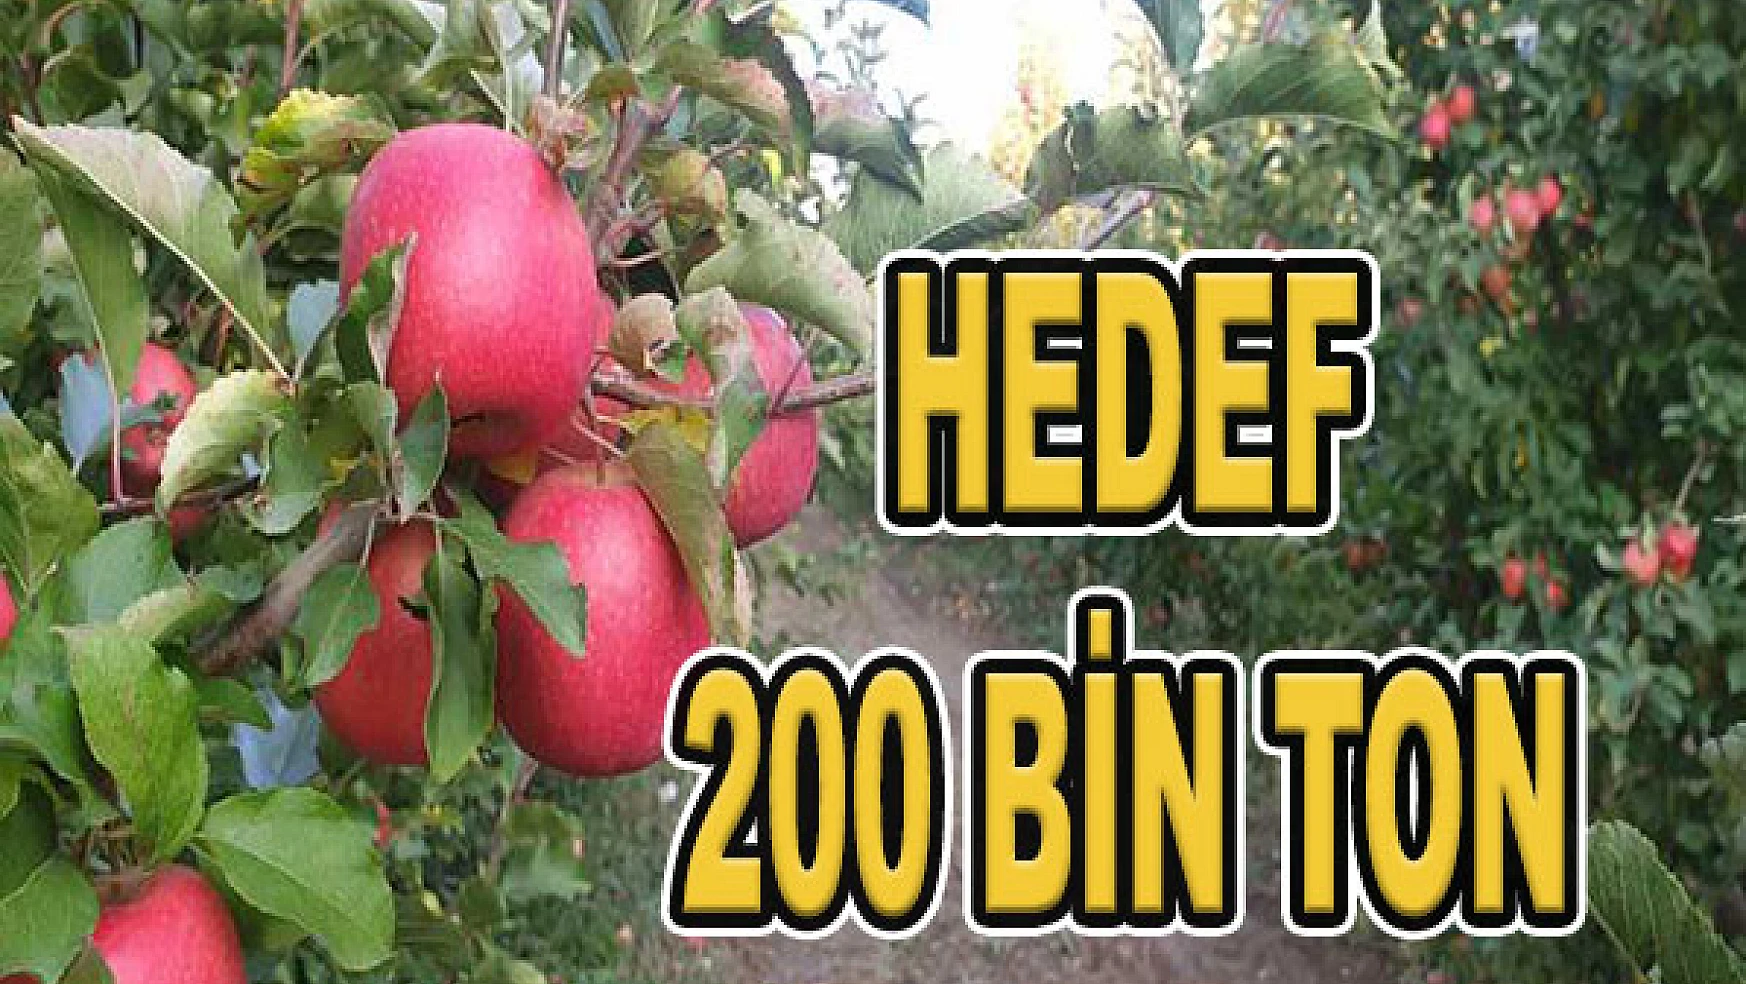 Hedef 200 bin ton elma